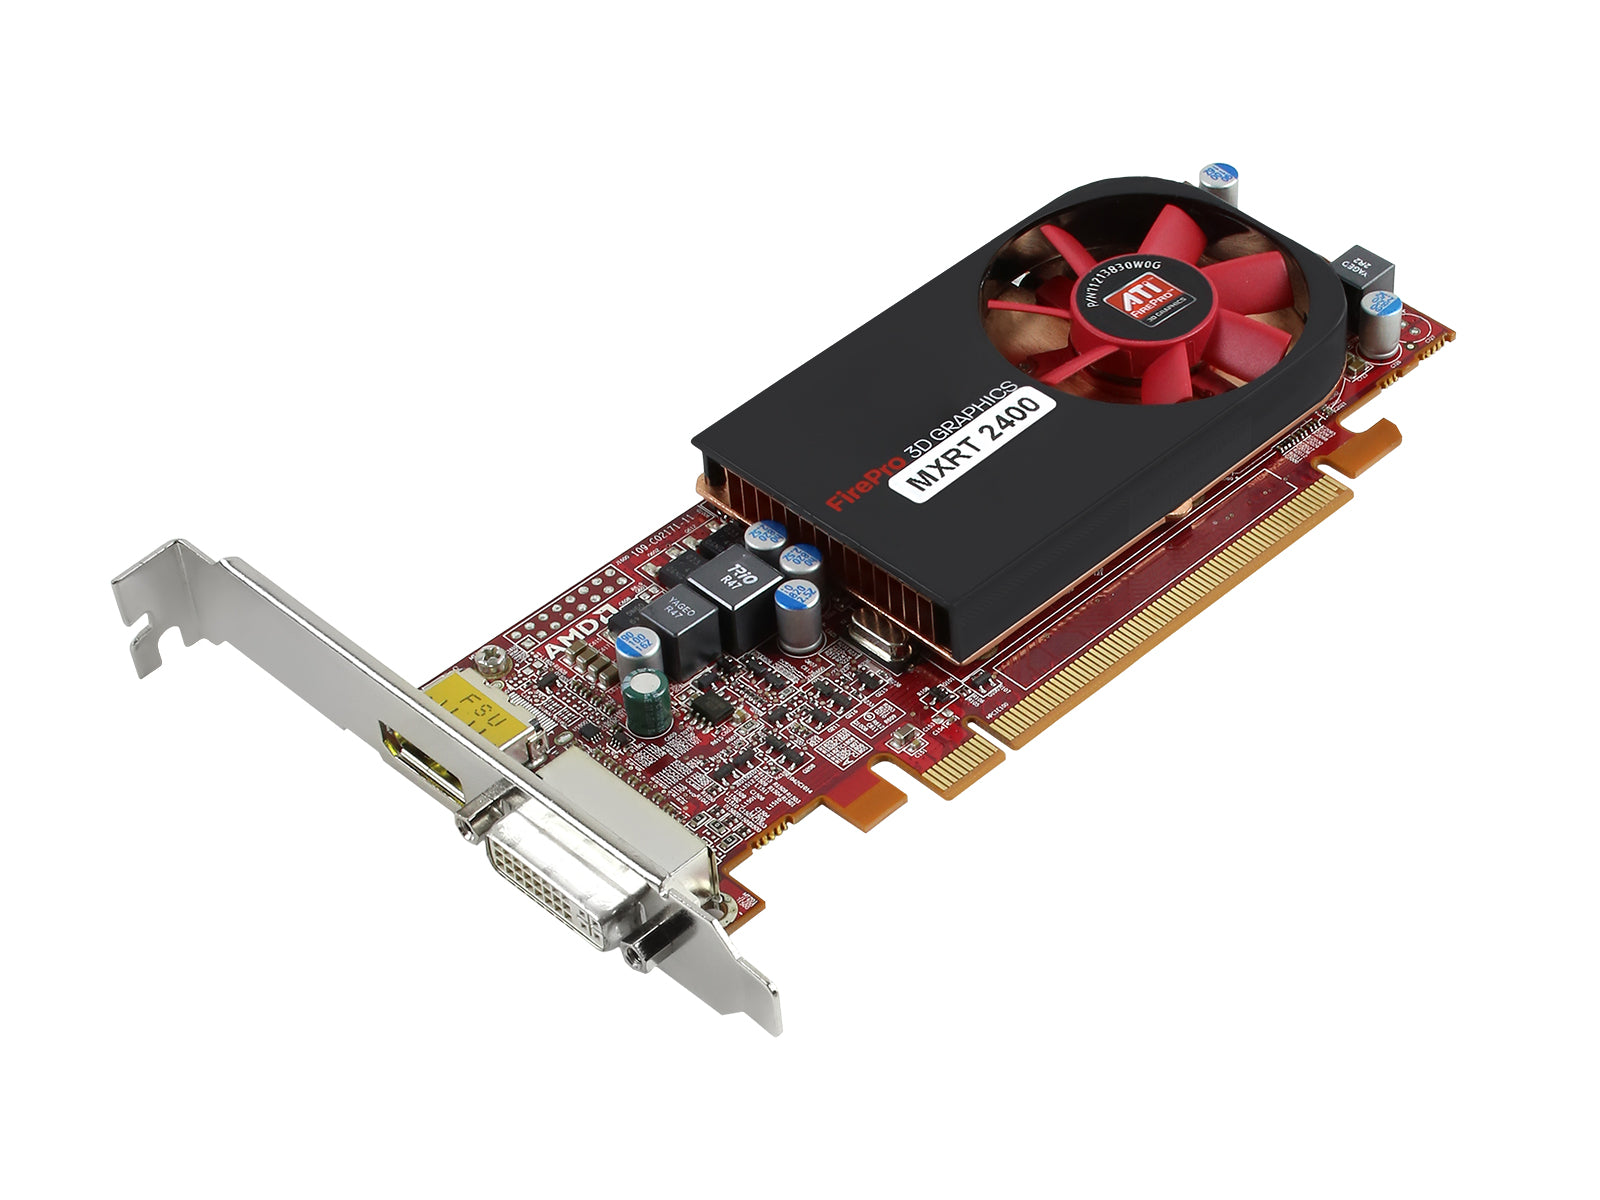 Barco MXRT-2400 512MB PCIe グラフィック カード (K9305035) Monitors.com